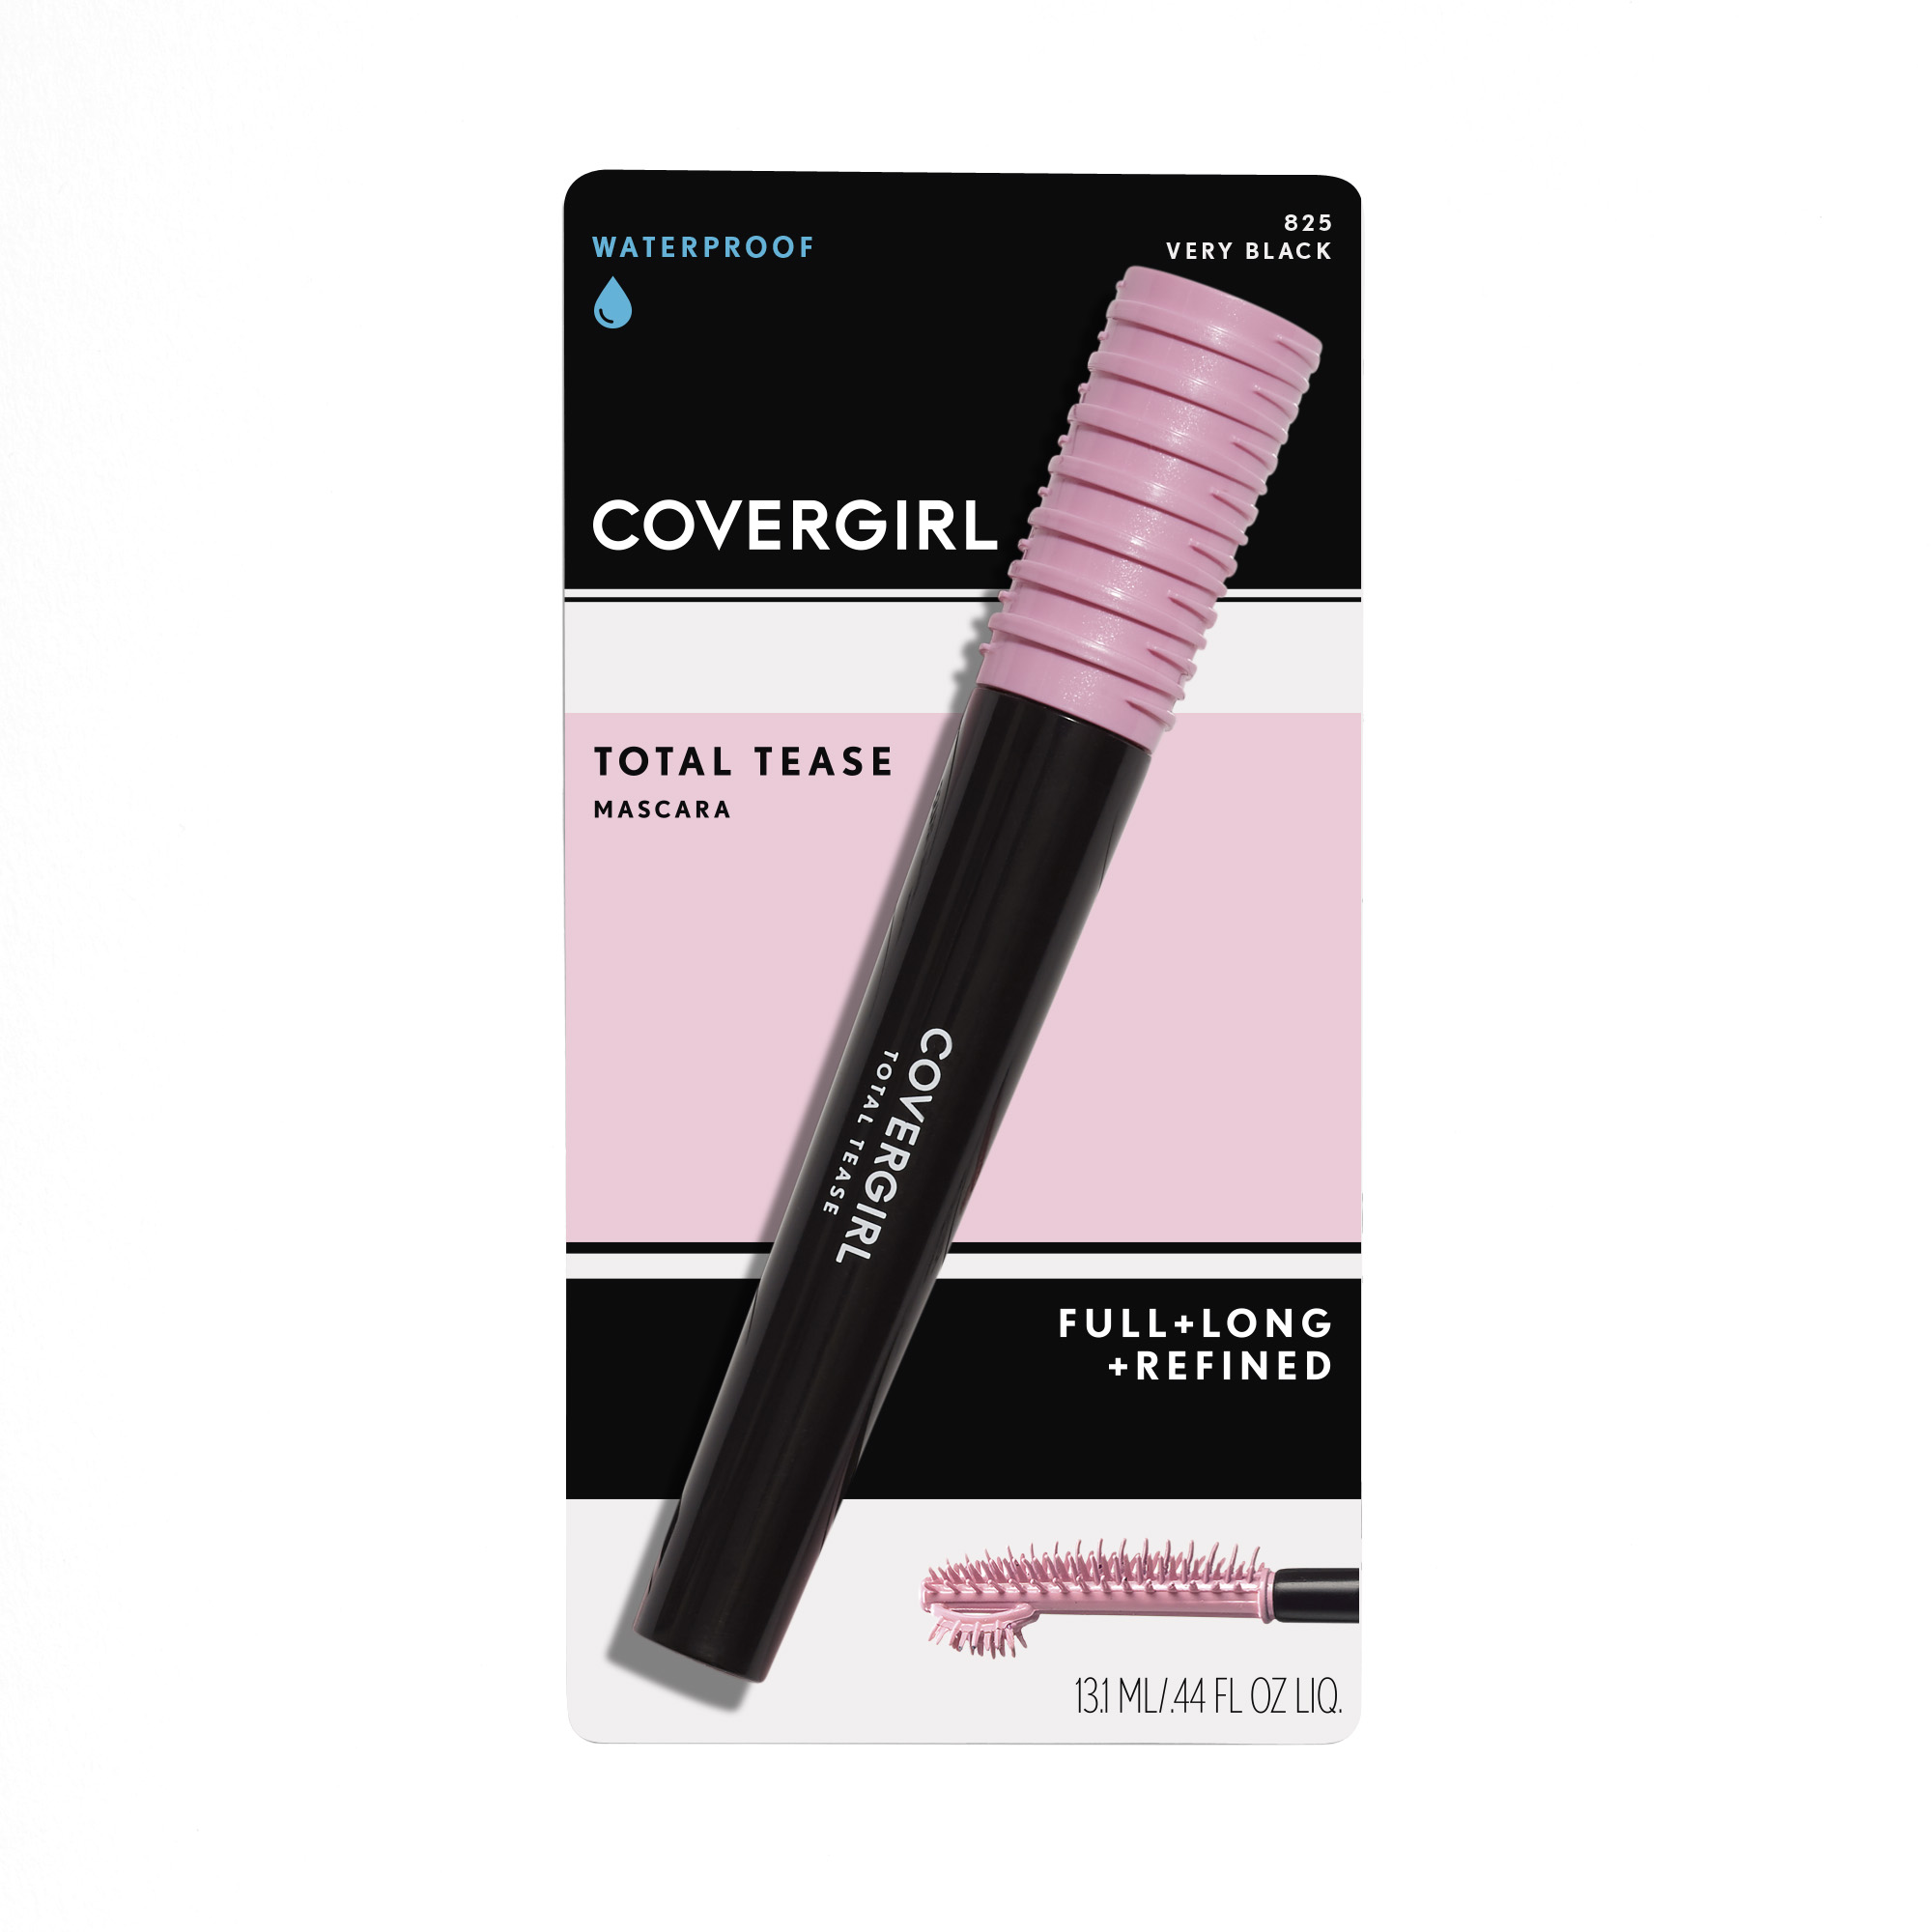 COVERGIRL Total Tease Full + Long + Refined Waterproof Mascara, Very Black, 0.21 fl oz - image 3 of 4